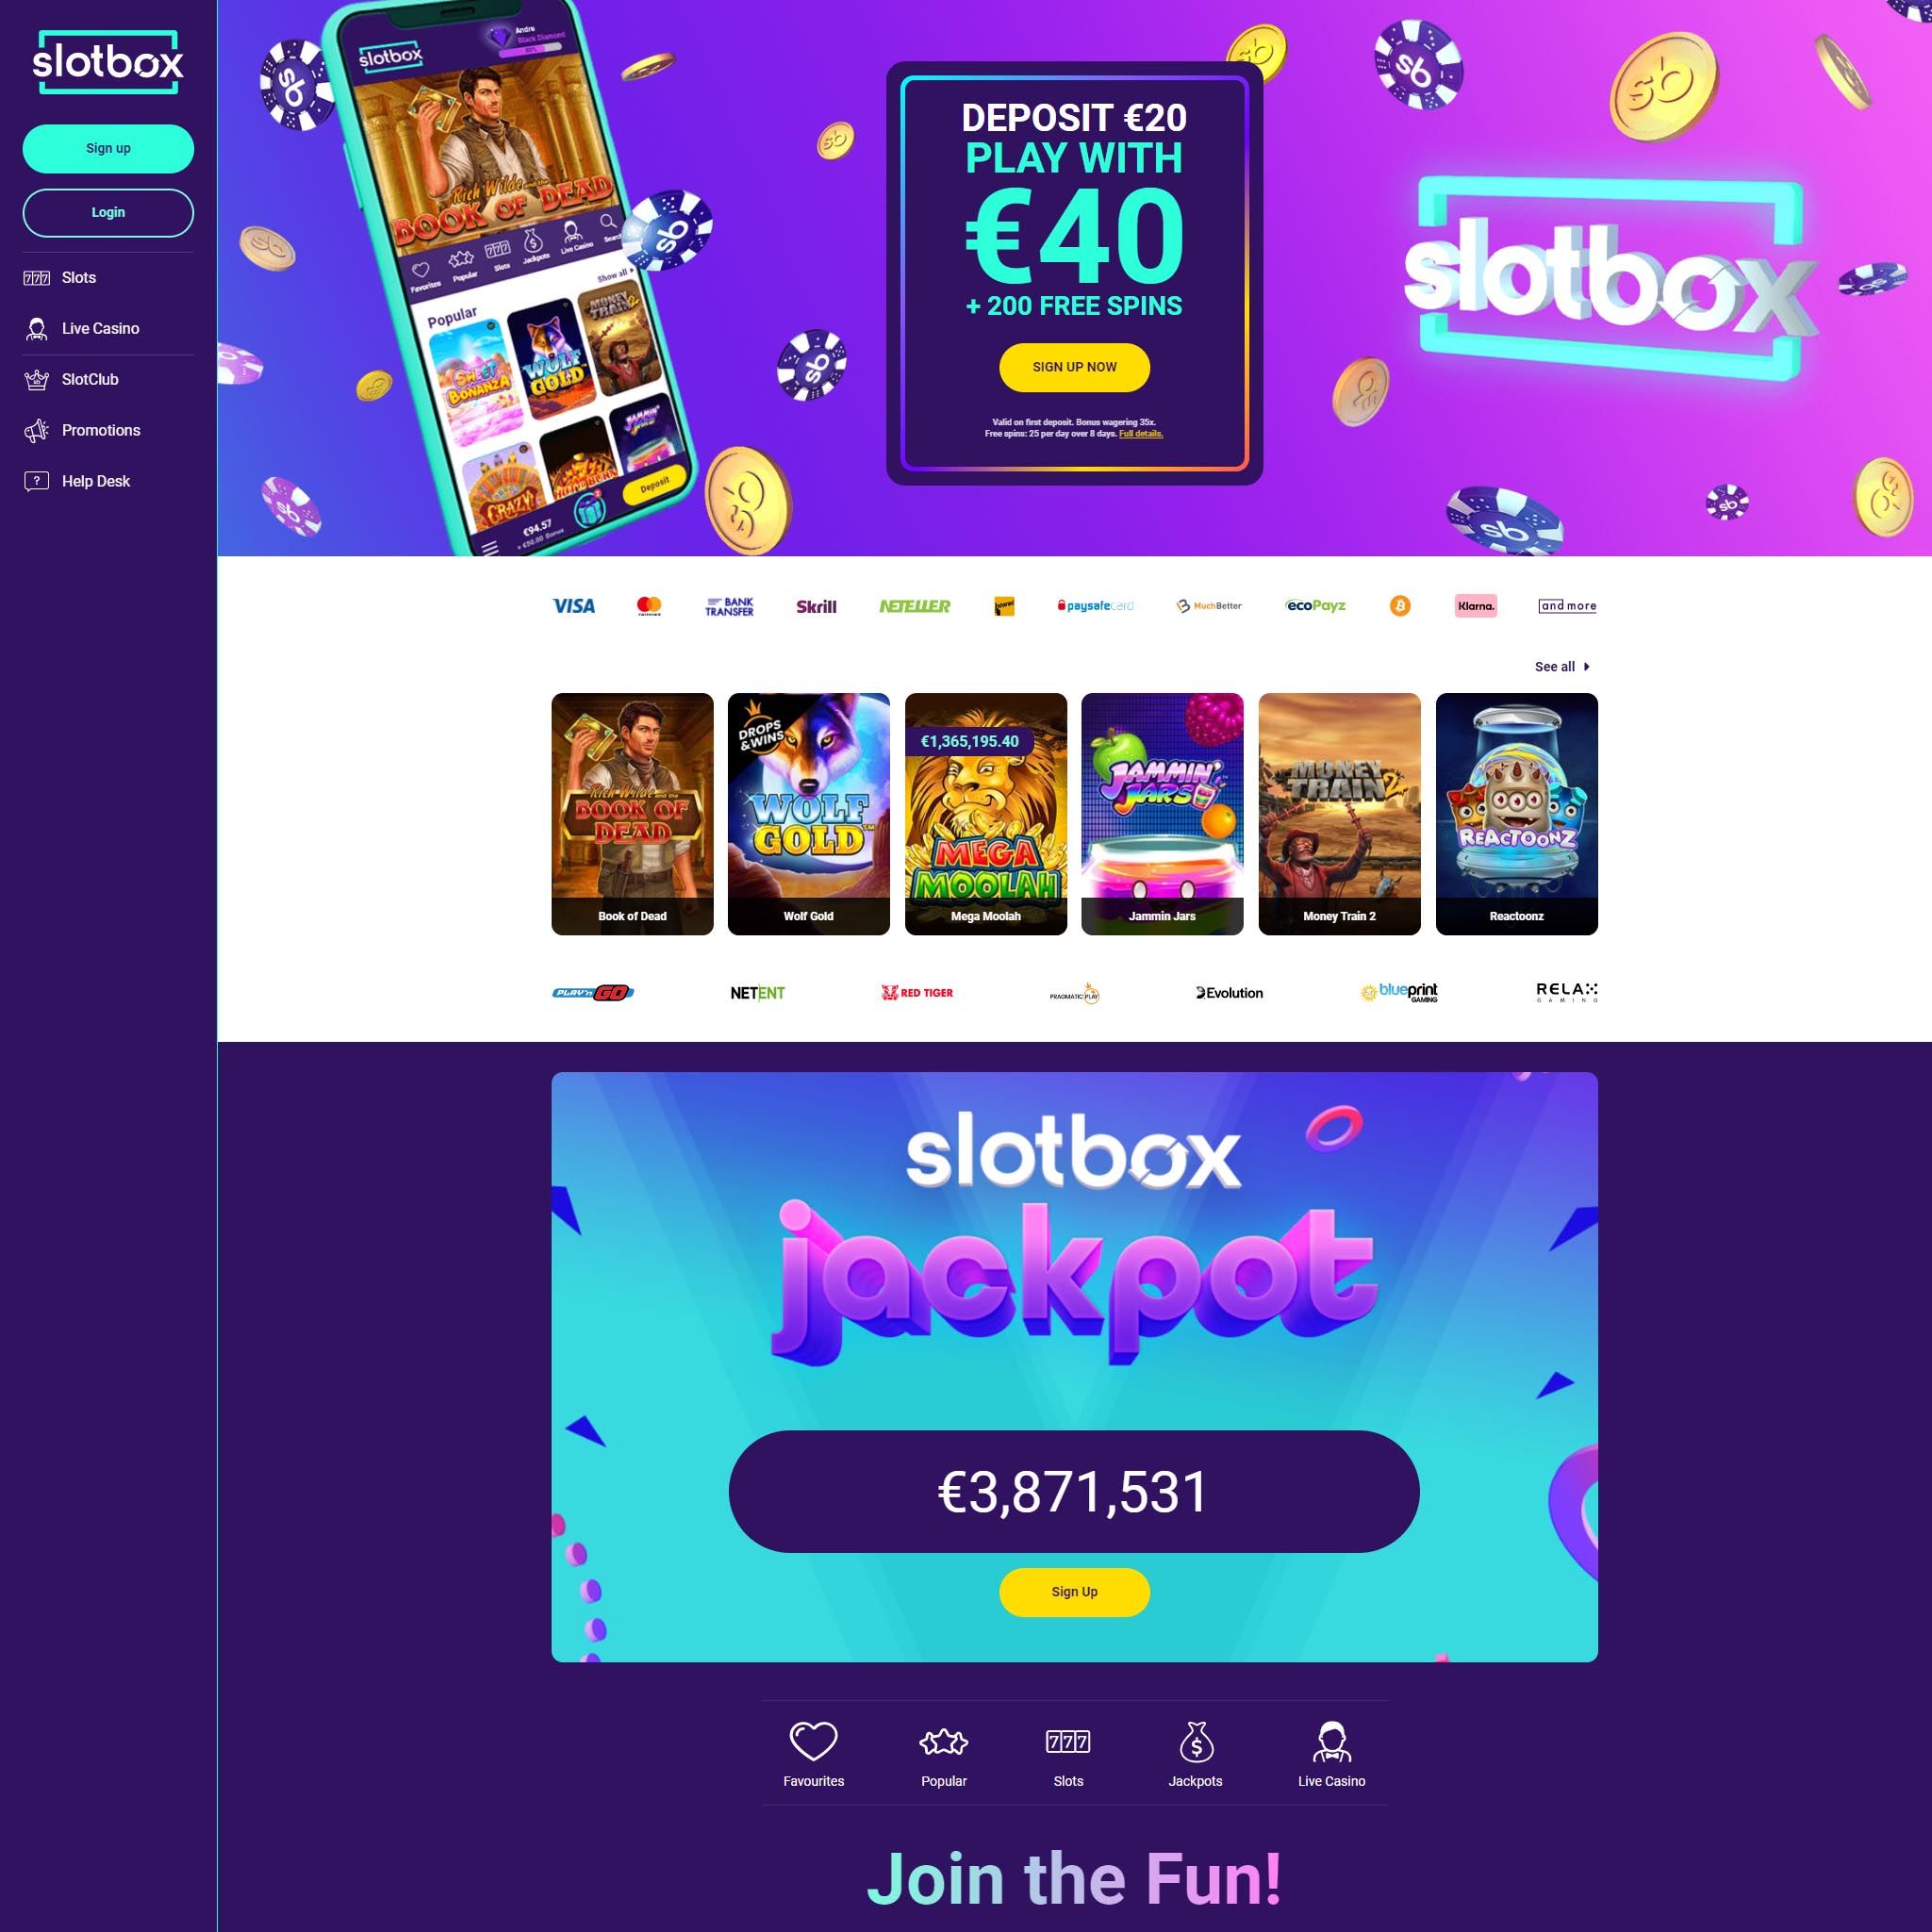 Slotbox review by Mr. Gamble